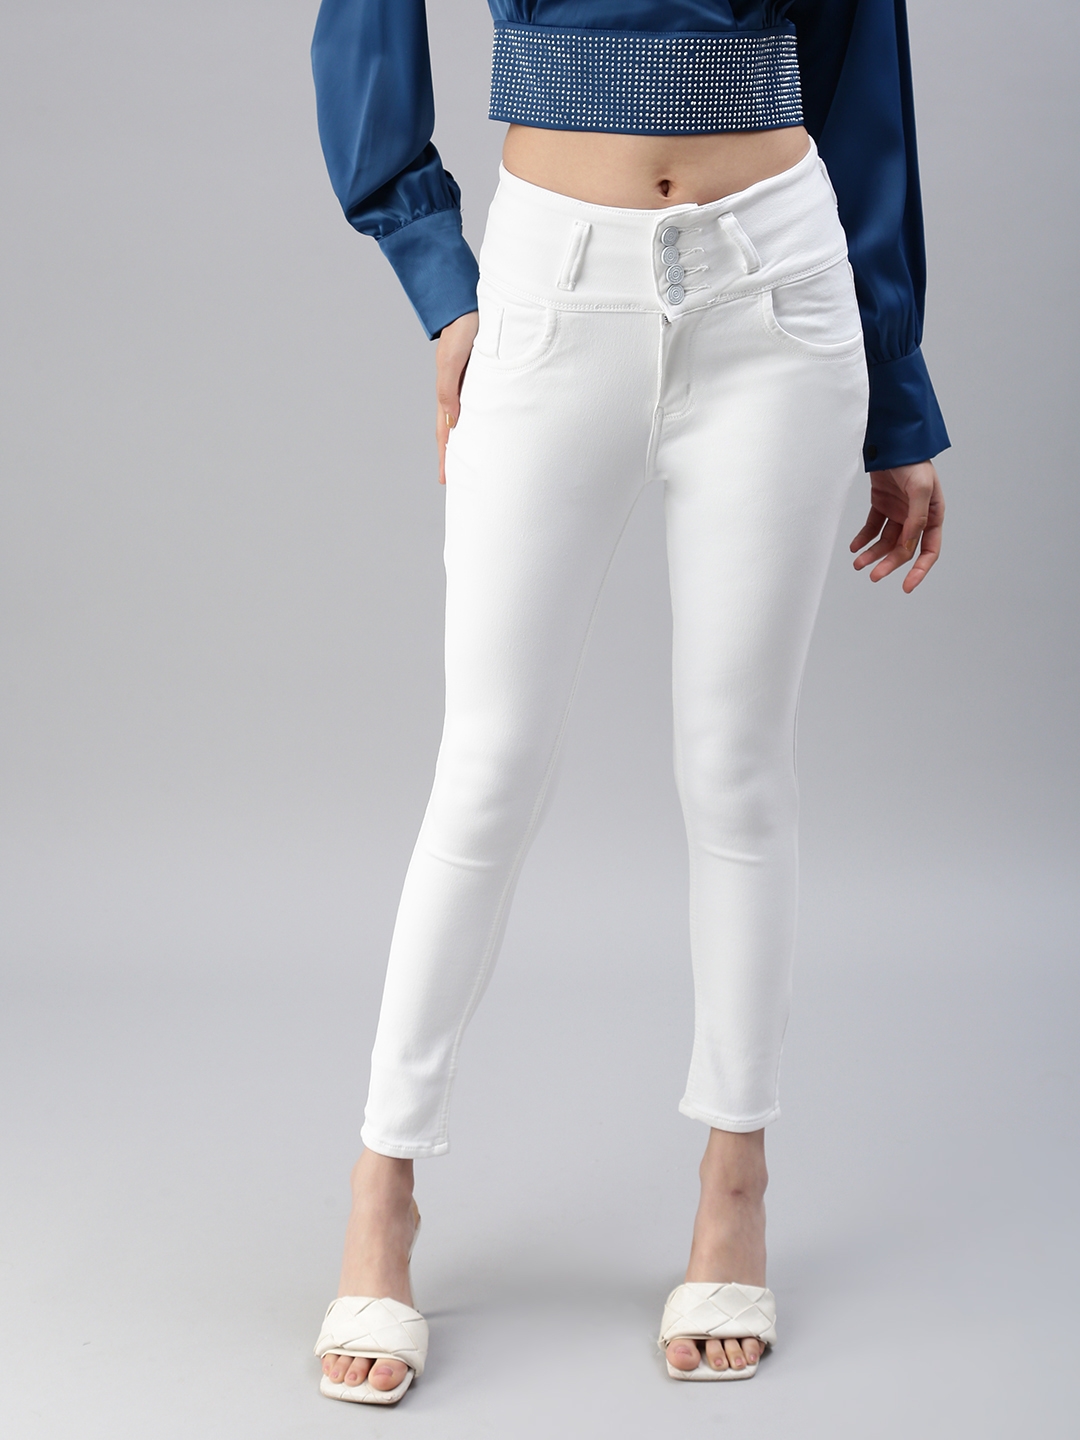 SHOWOFF Women's Clean Look White Skinny Fit Denim Jeans